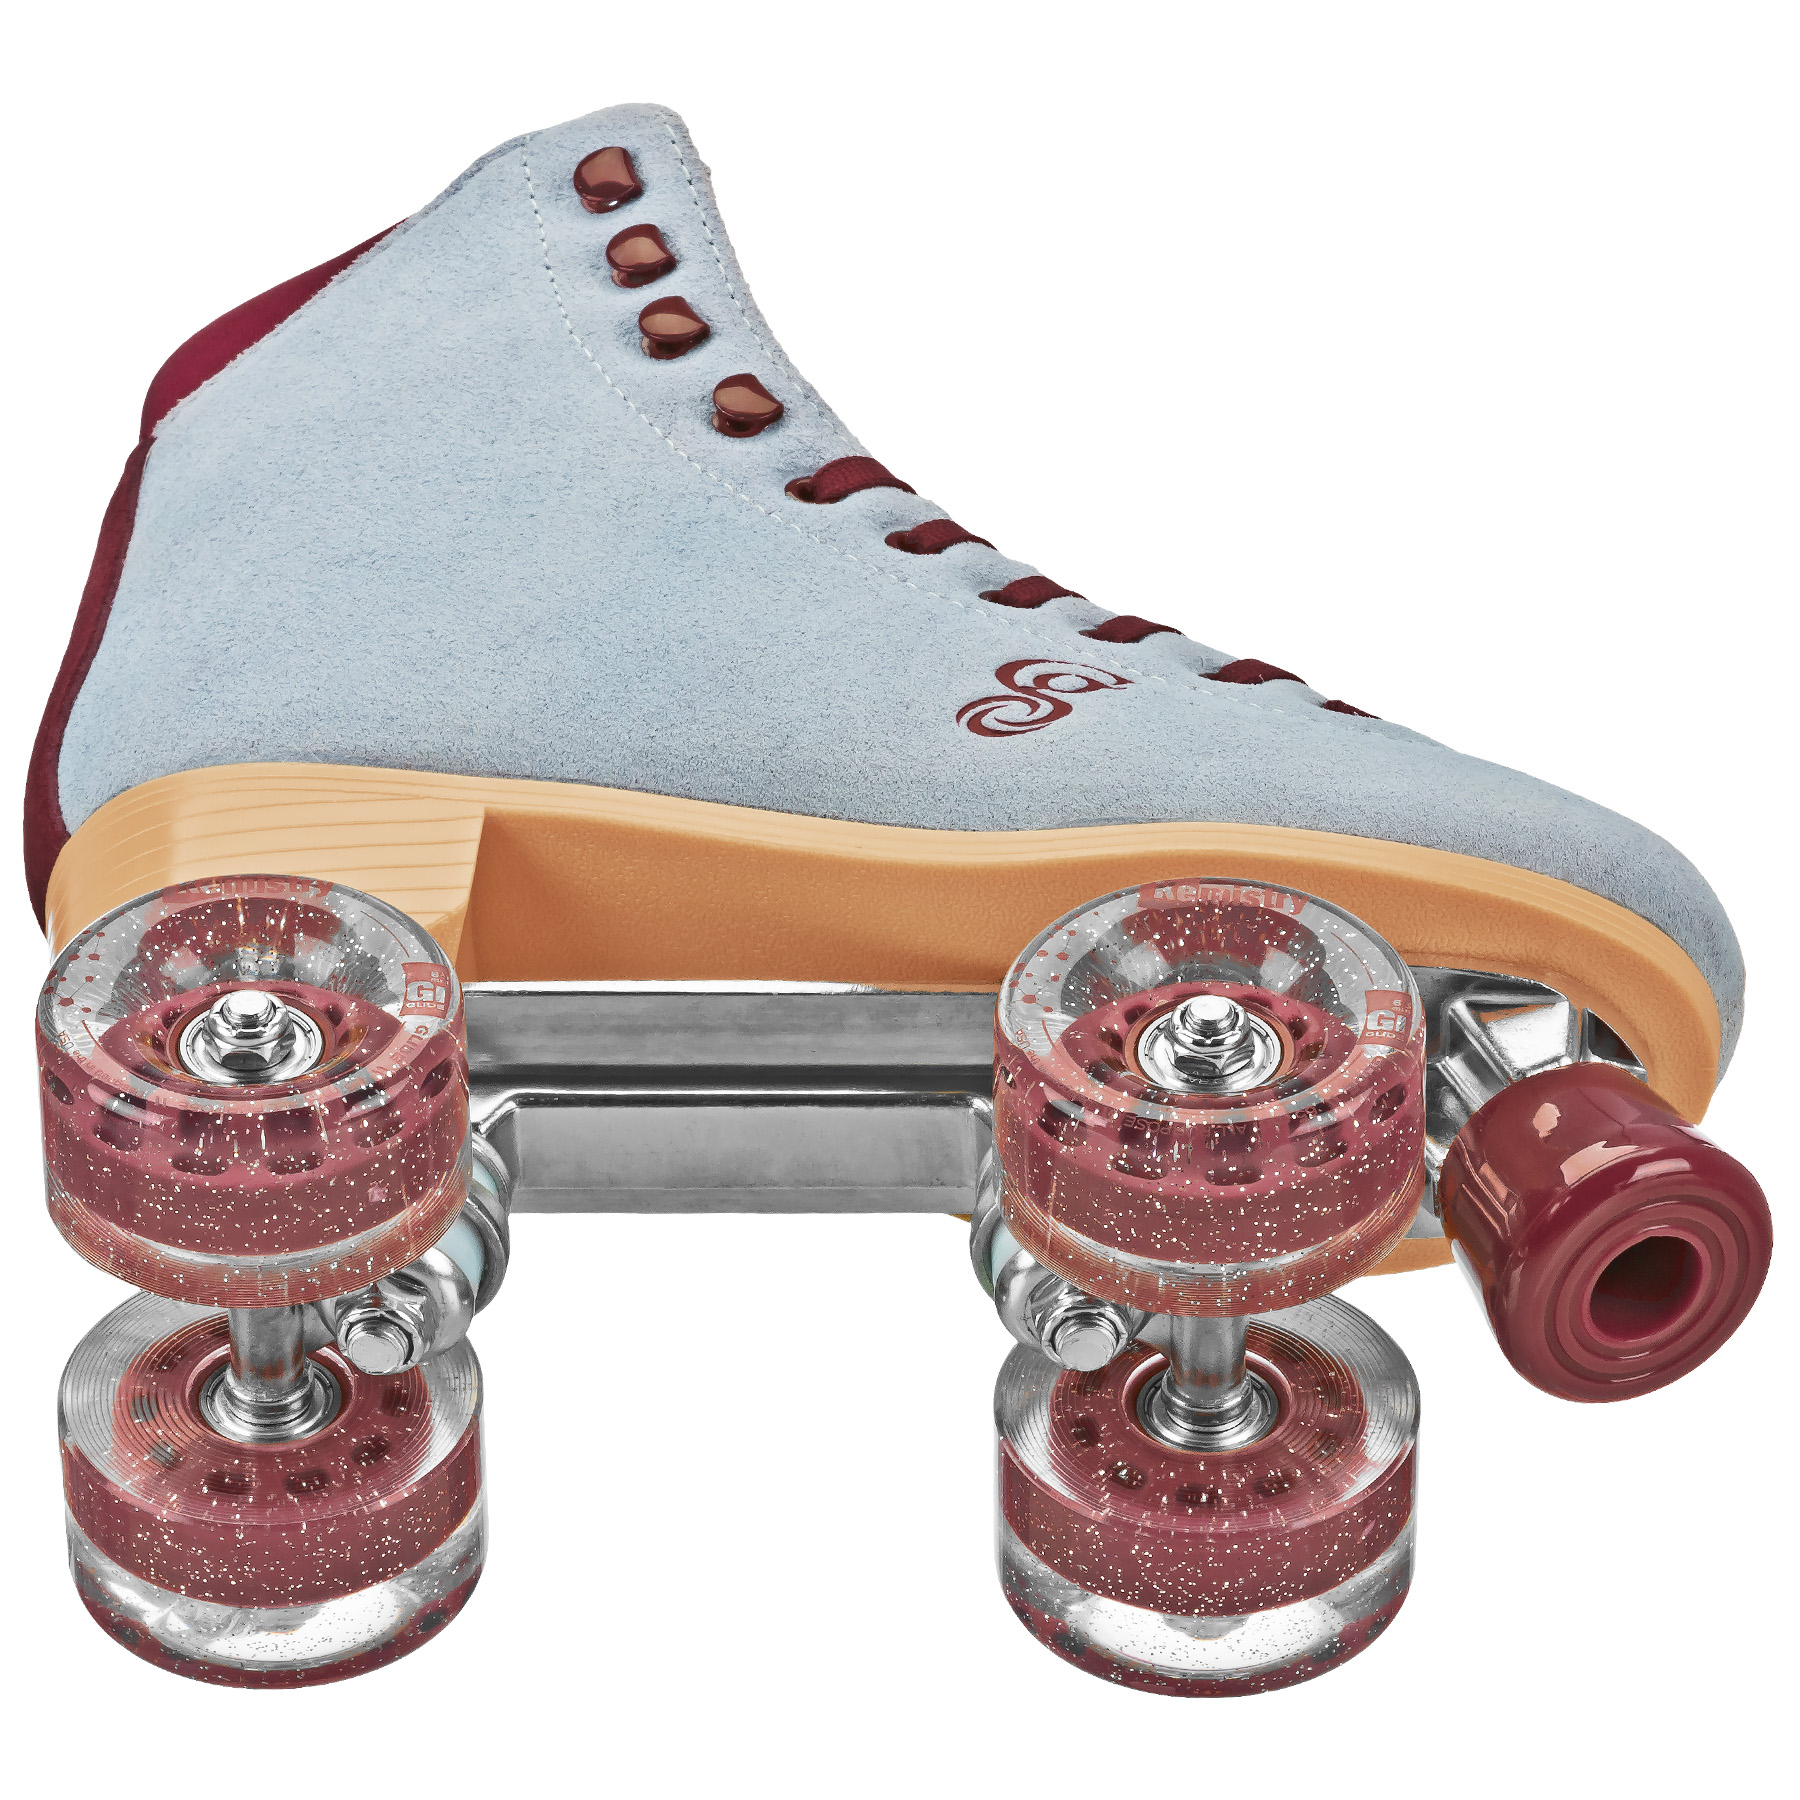 Roller Derby Candi Girl Carlin Women's Roller Skates - image 3 of 5